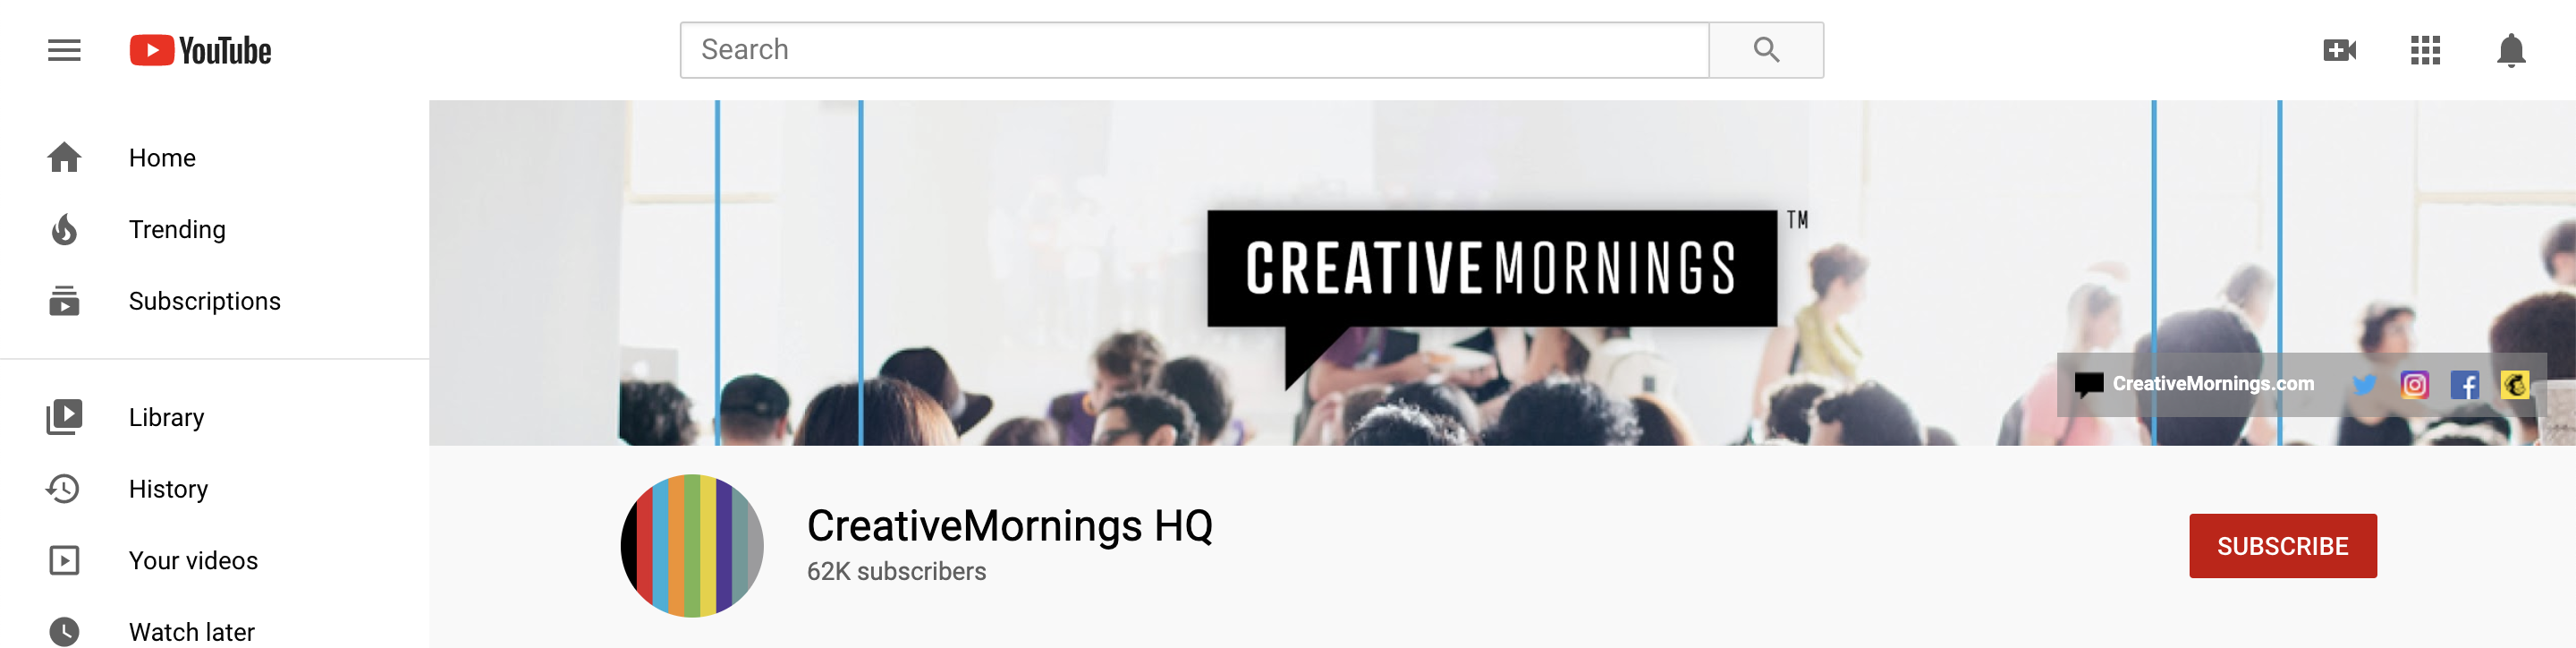 Coronavirus Lockdown Guide YouTube Channels Creative Mornings HQ